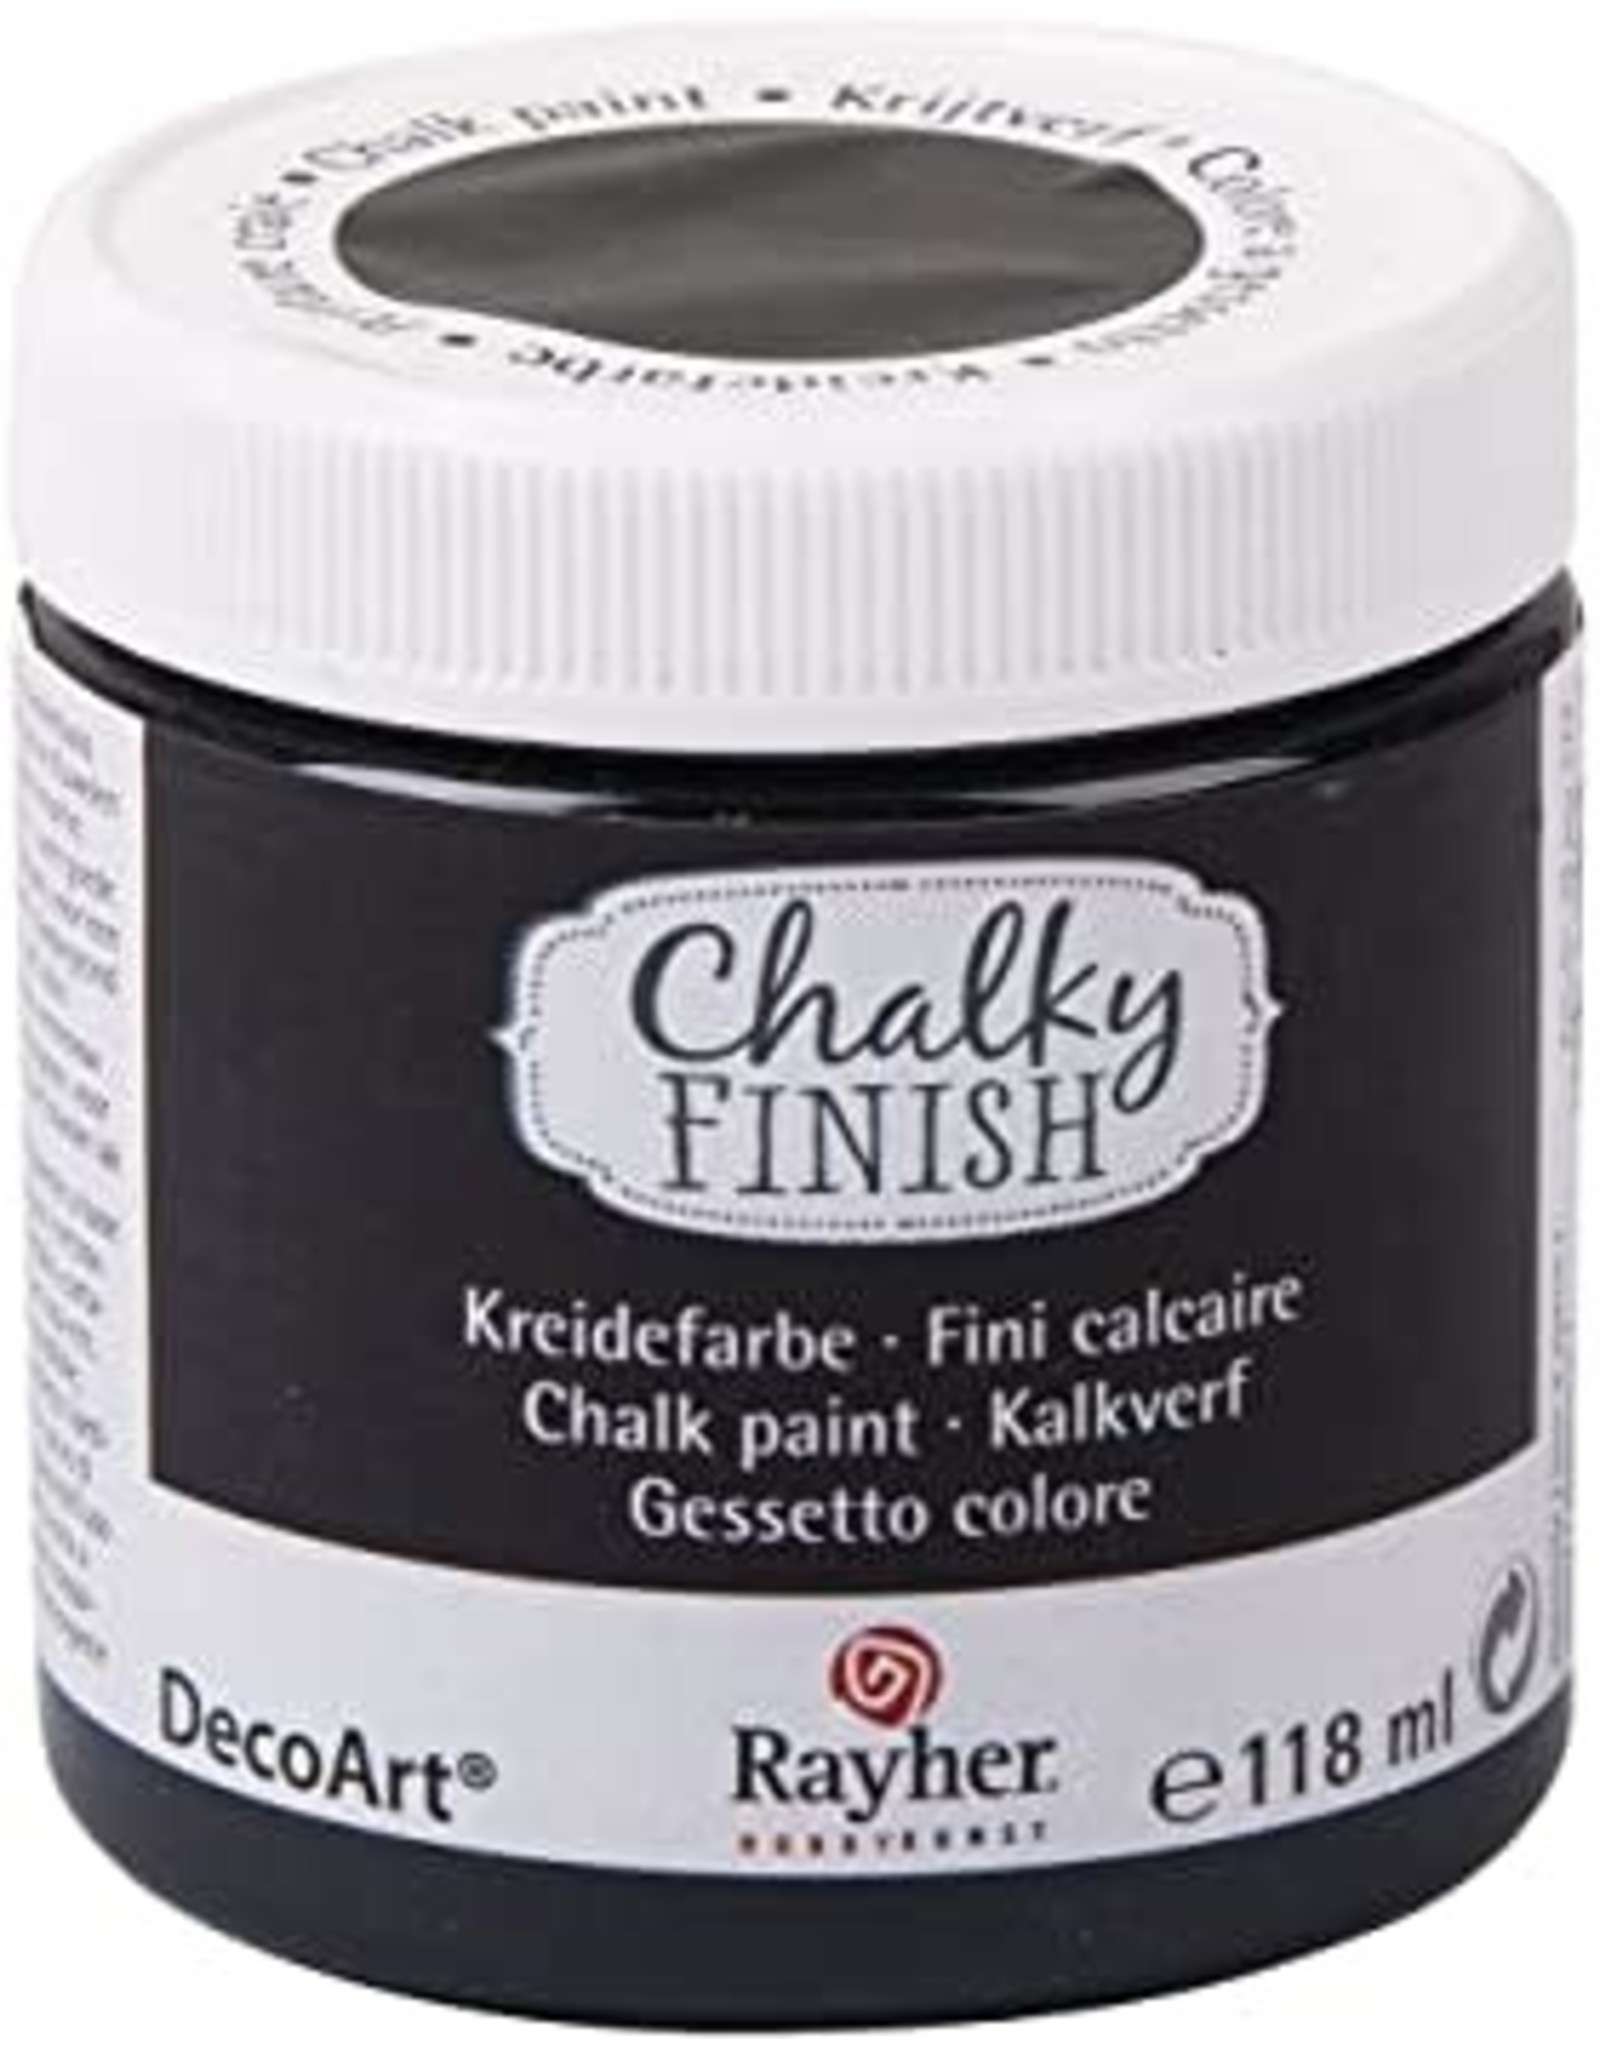 Rayher Peinture Chalky Finish 118 ml Bois ébène 574